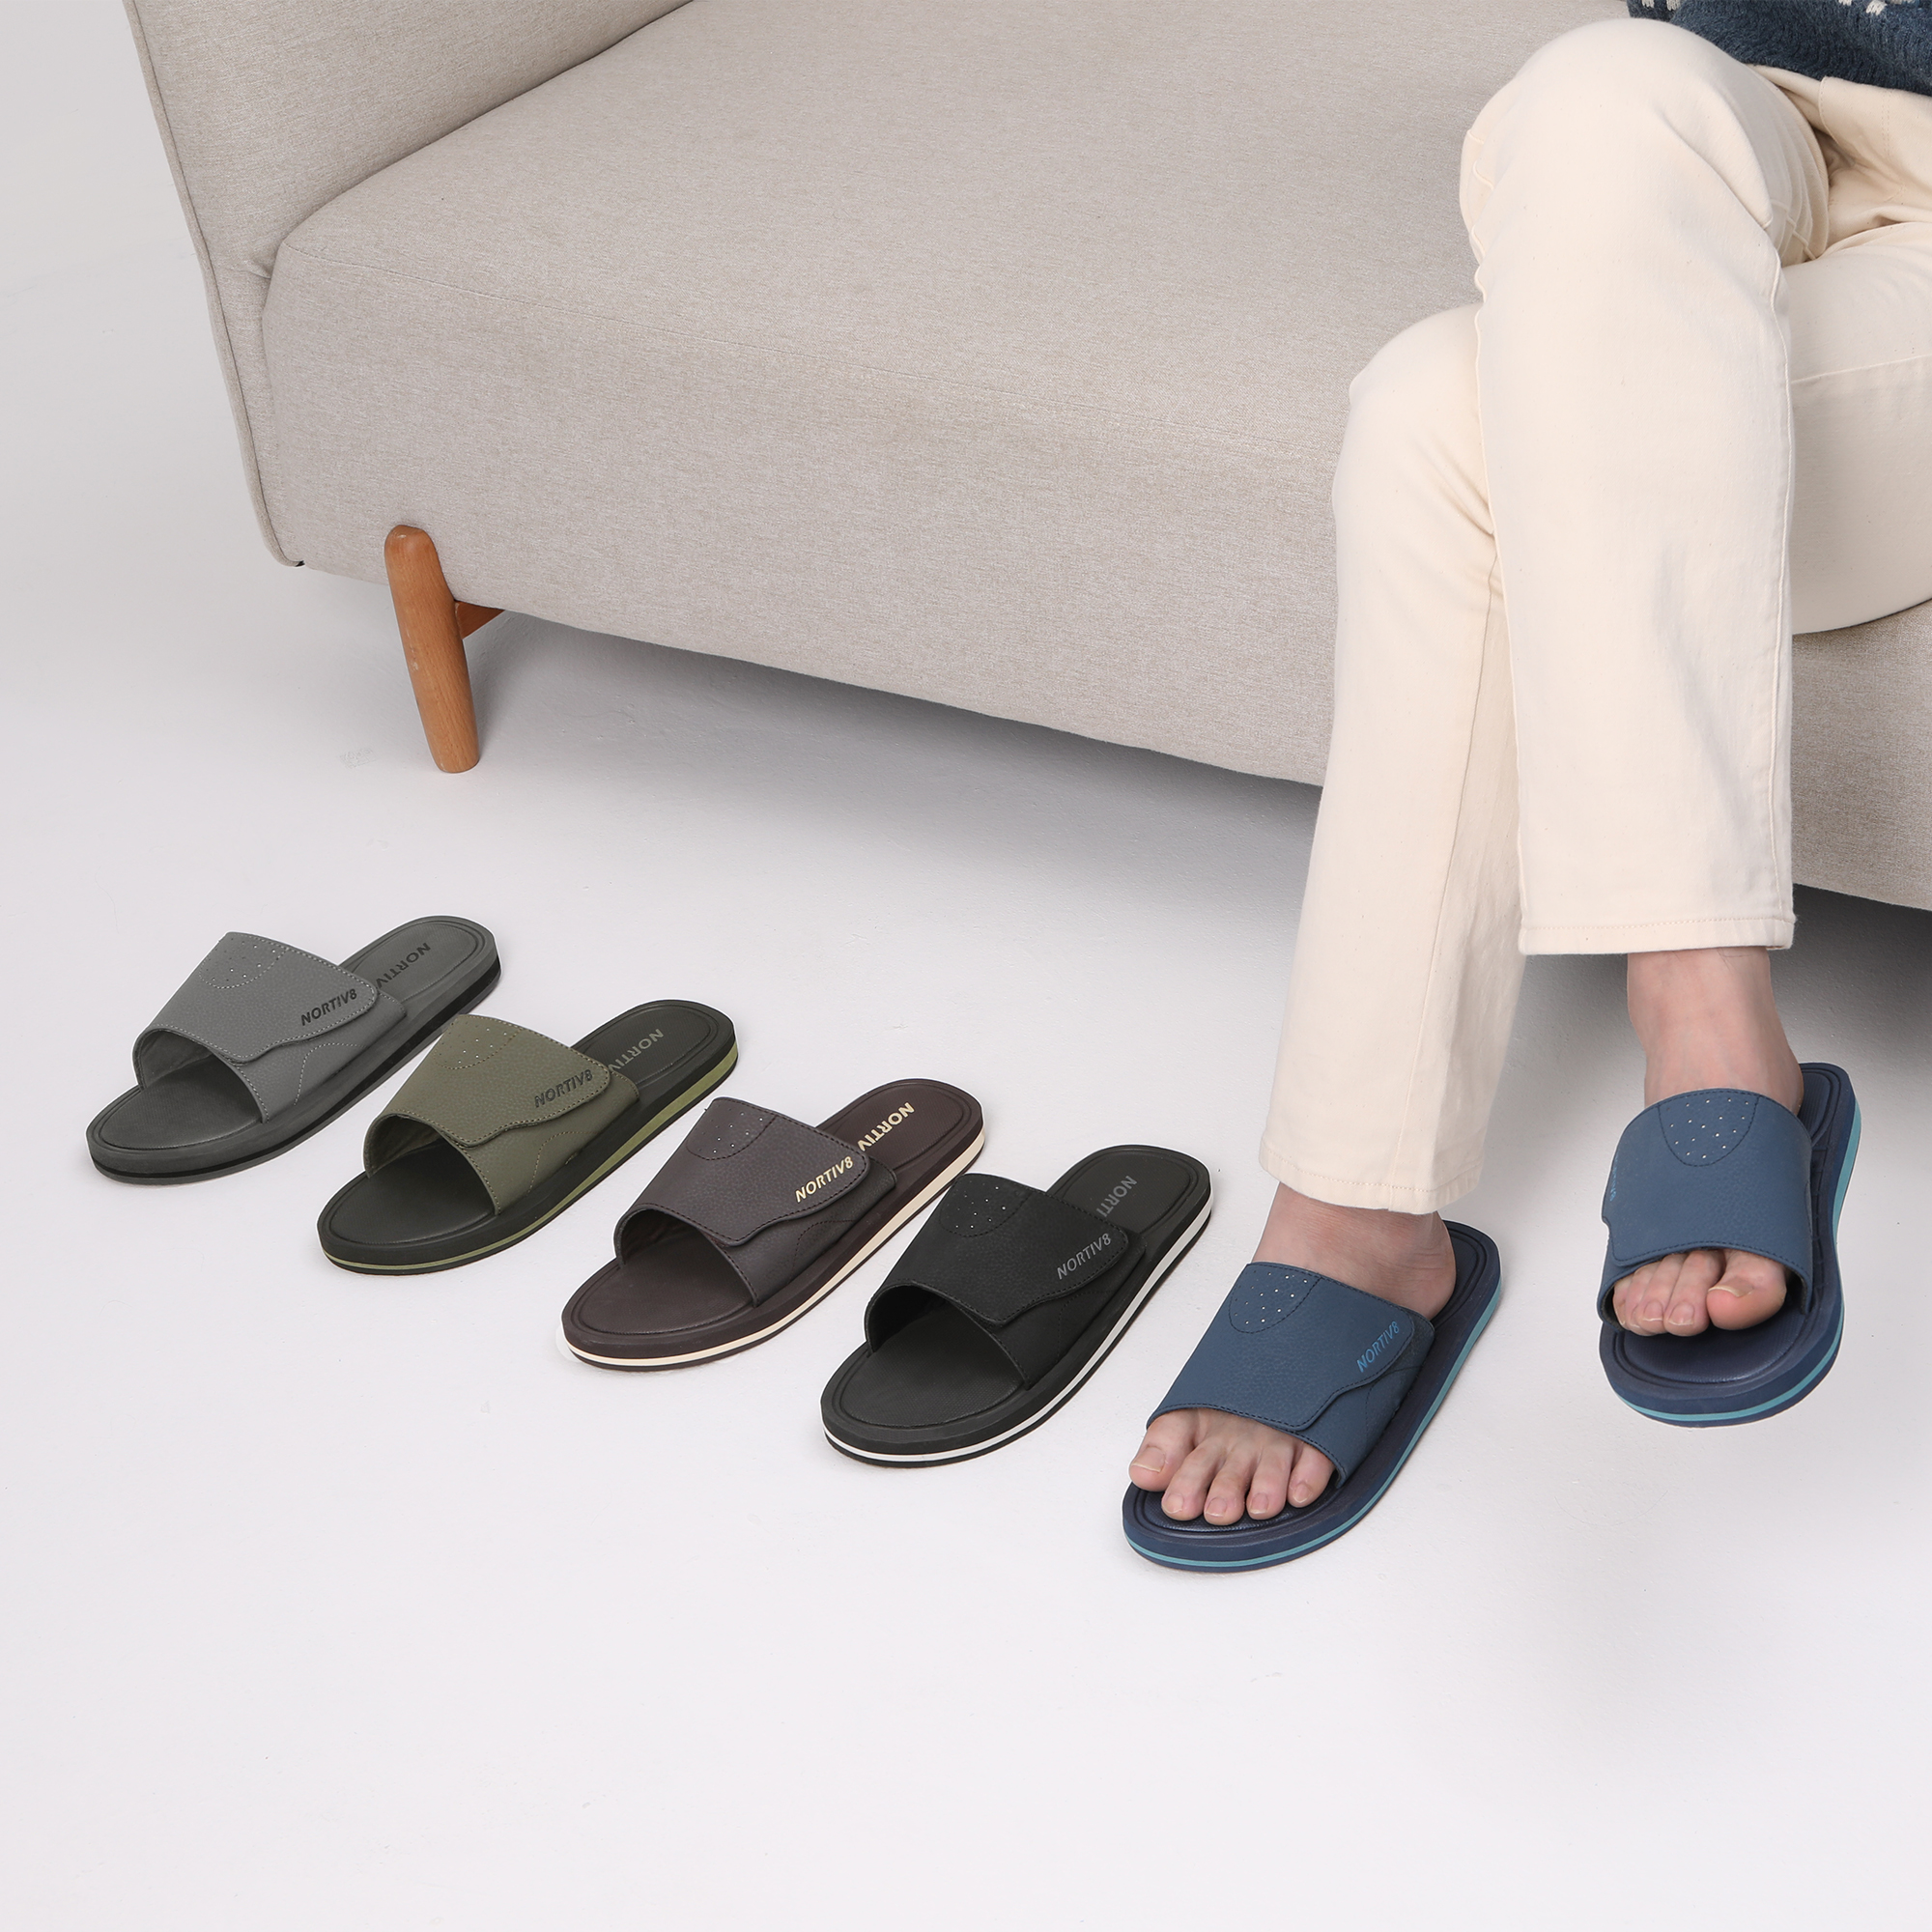 Nortiv8 Men's Memory Foam Adjustable Slide Sandals Comfort Lightweight Summer Beach Sandals Shoes FUSION GREY Size 12 - image 4 of 5